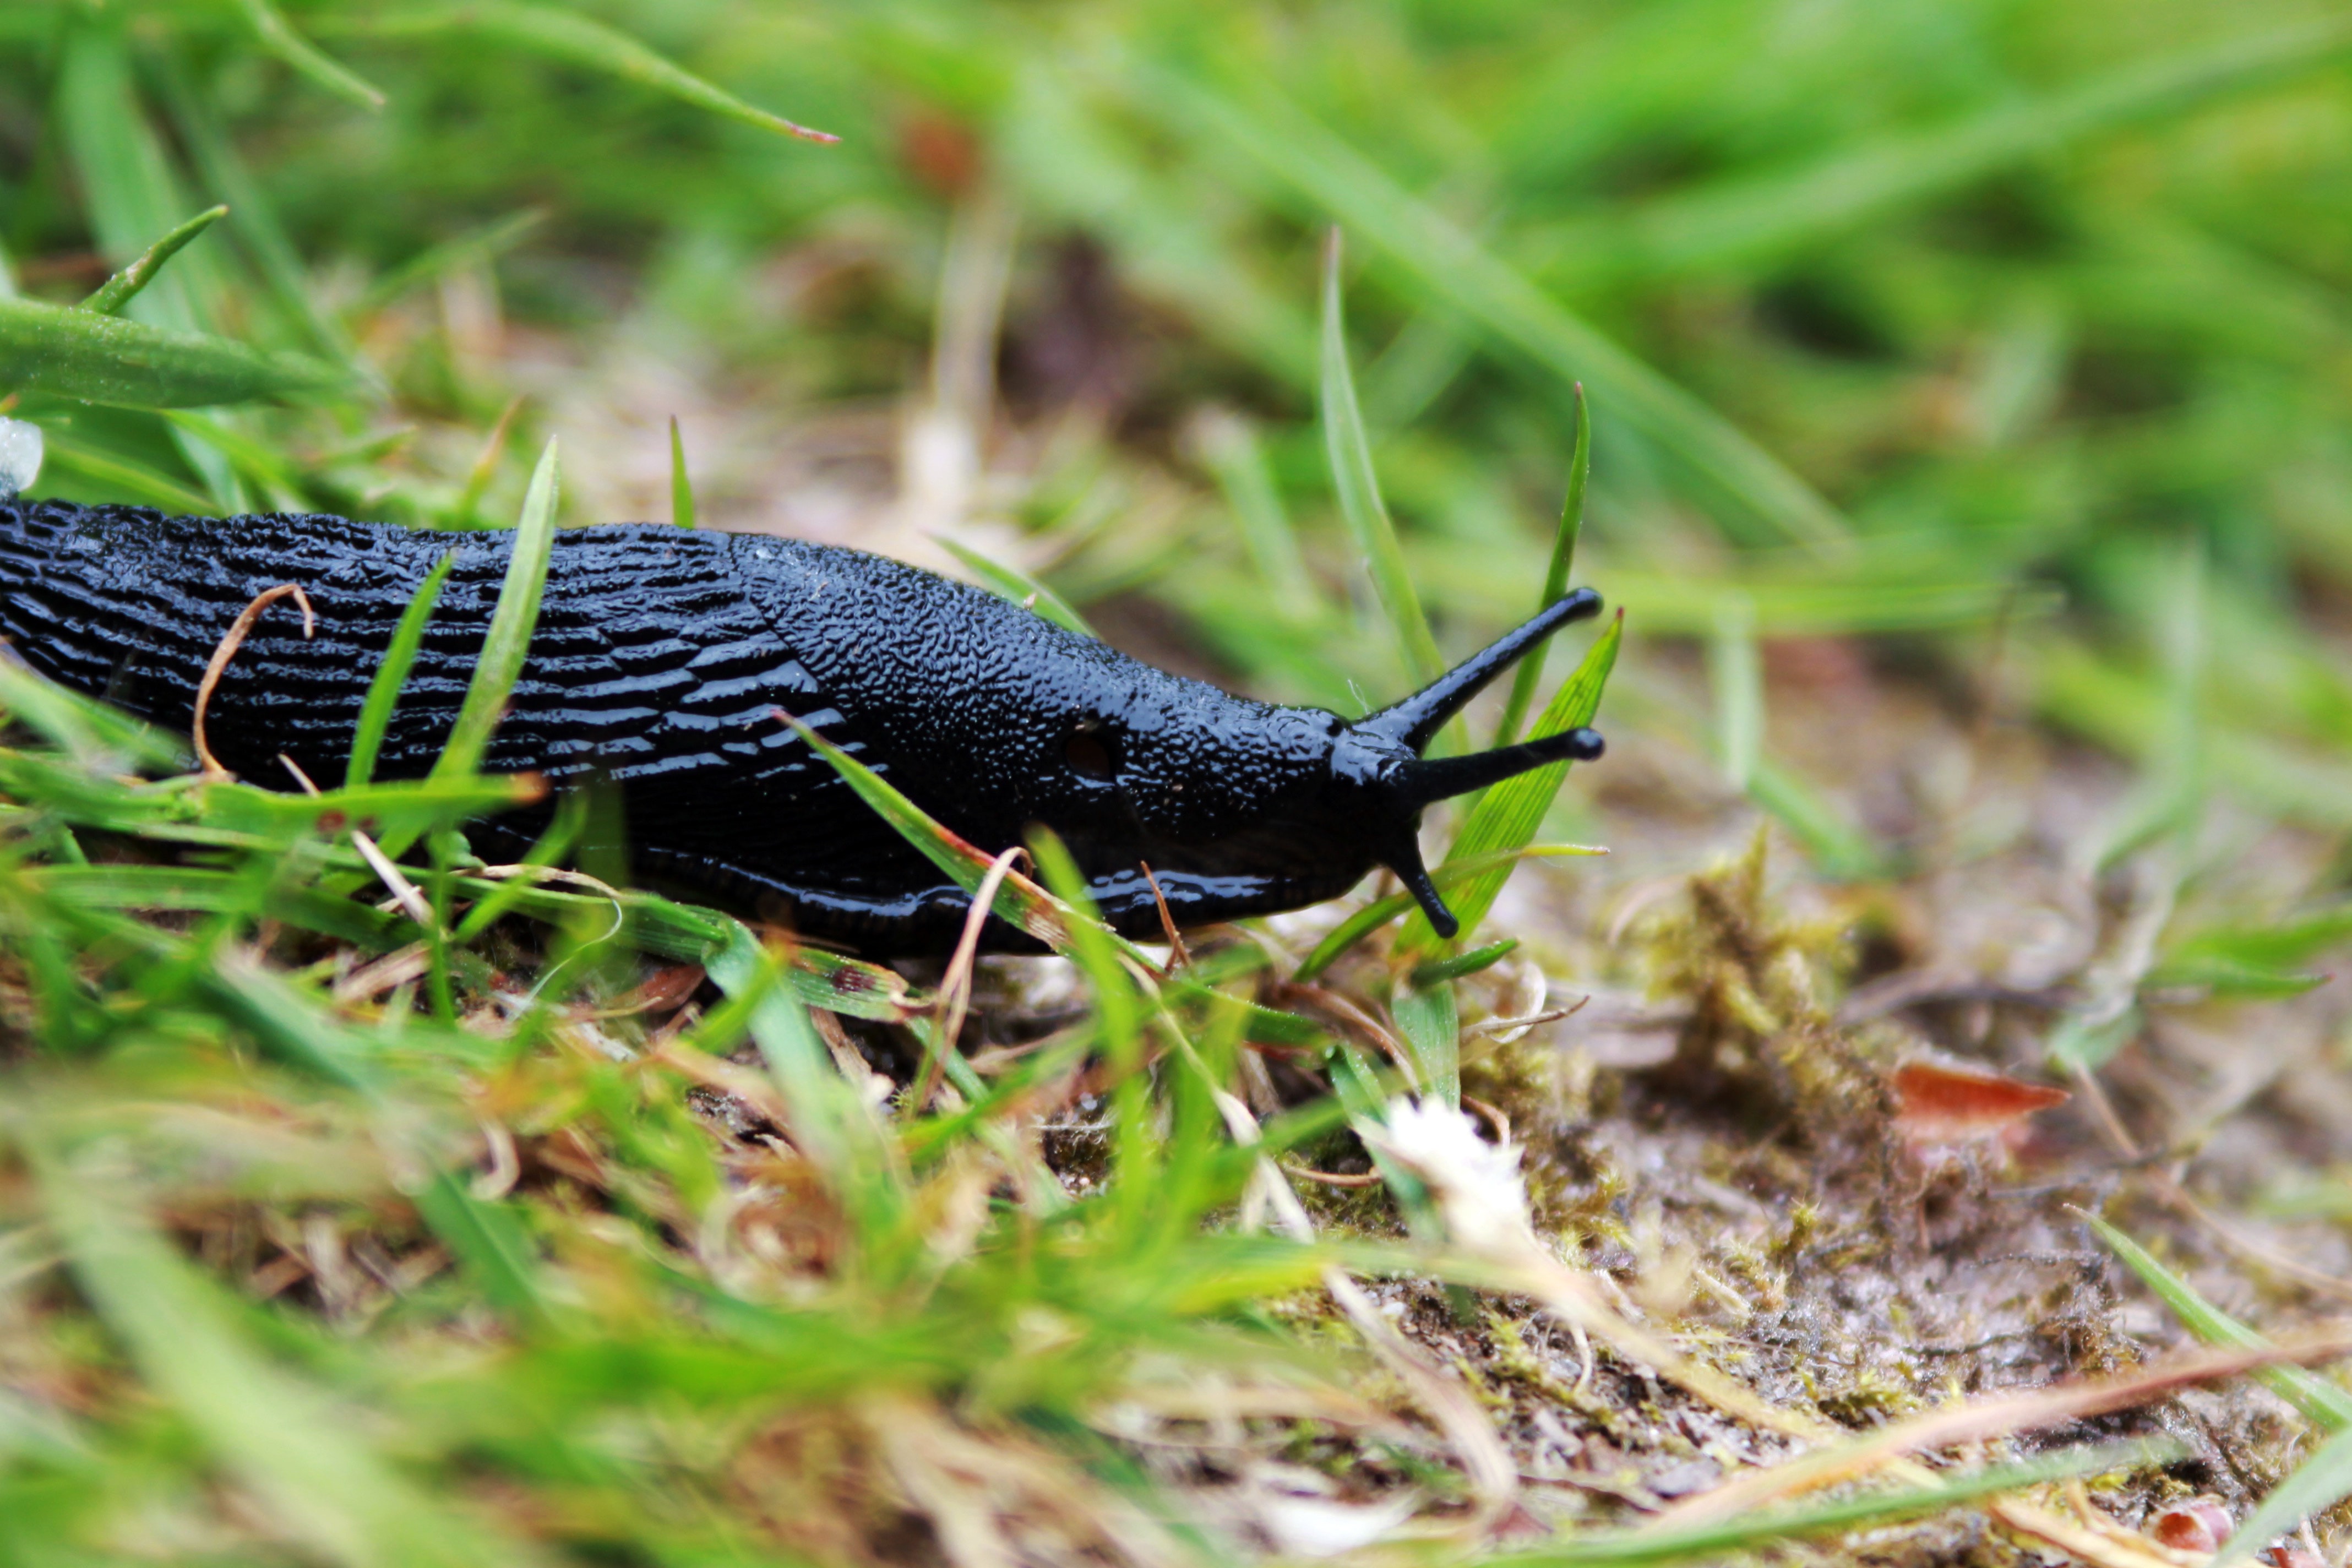 Black snail on grass photo